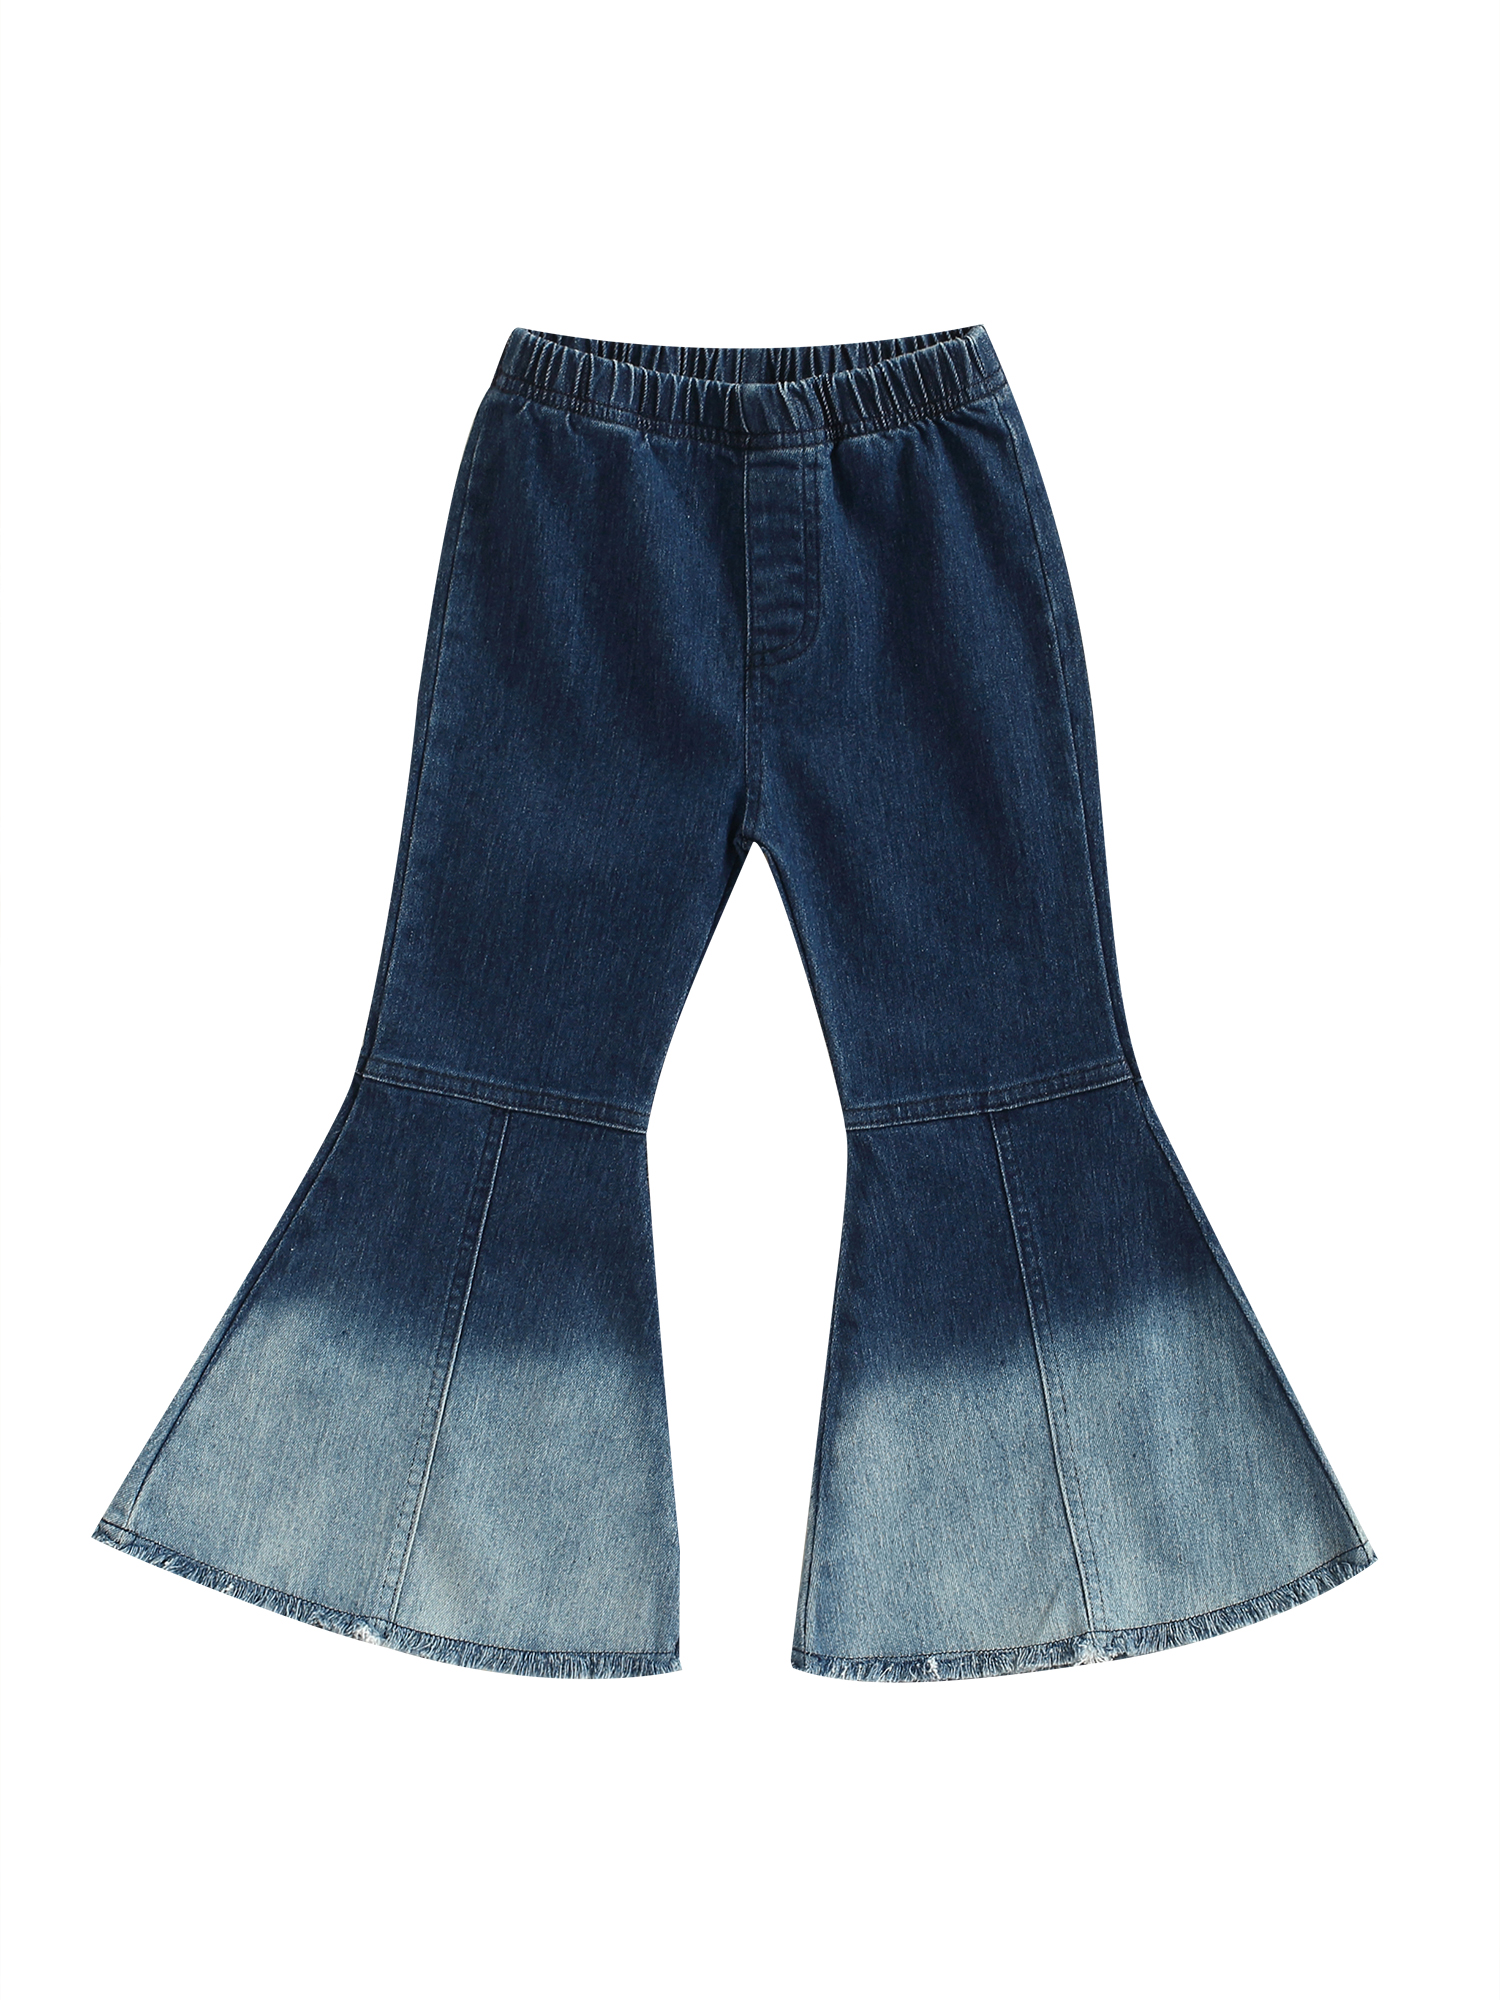 Sunisery Kids Toddler Girl Denim Bell Bottom Flared Pants High Waist Solid Wide Legs Elastic Waist Jeans - image 1 of 6